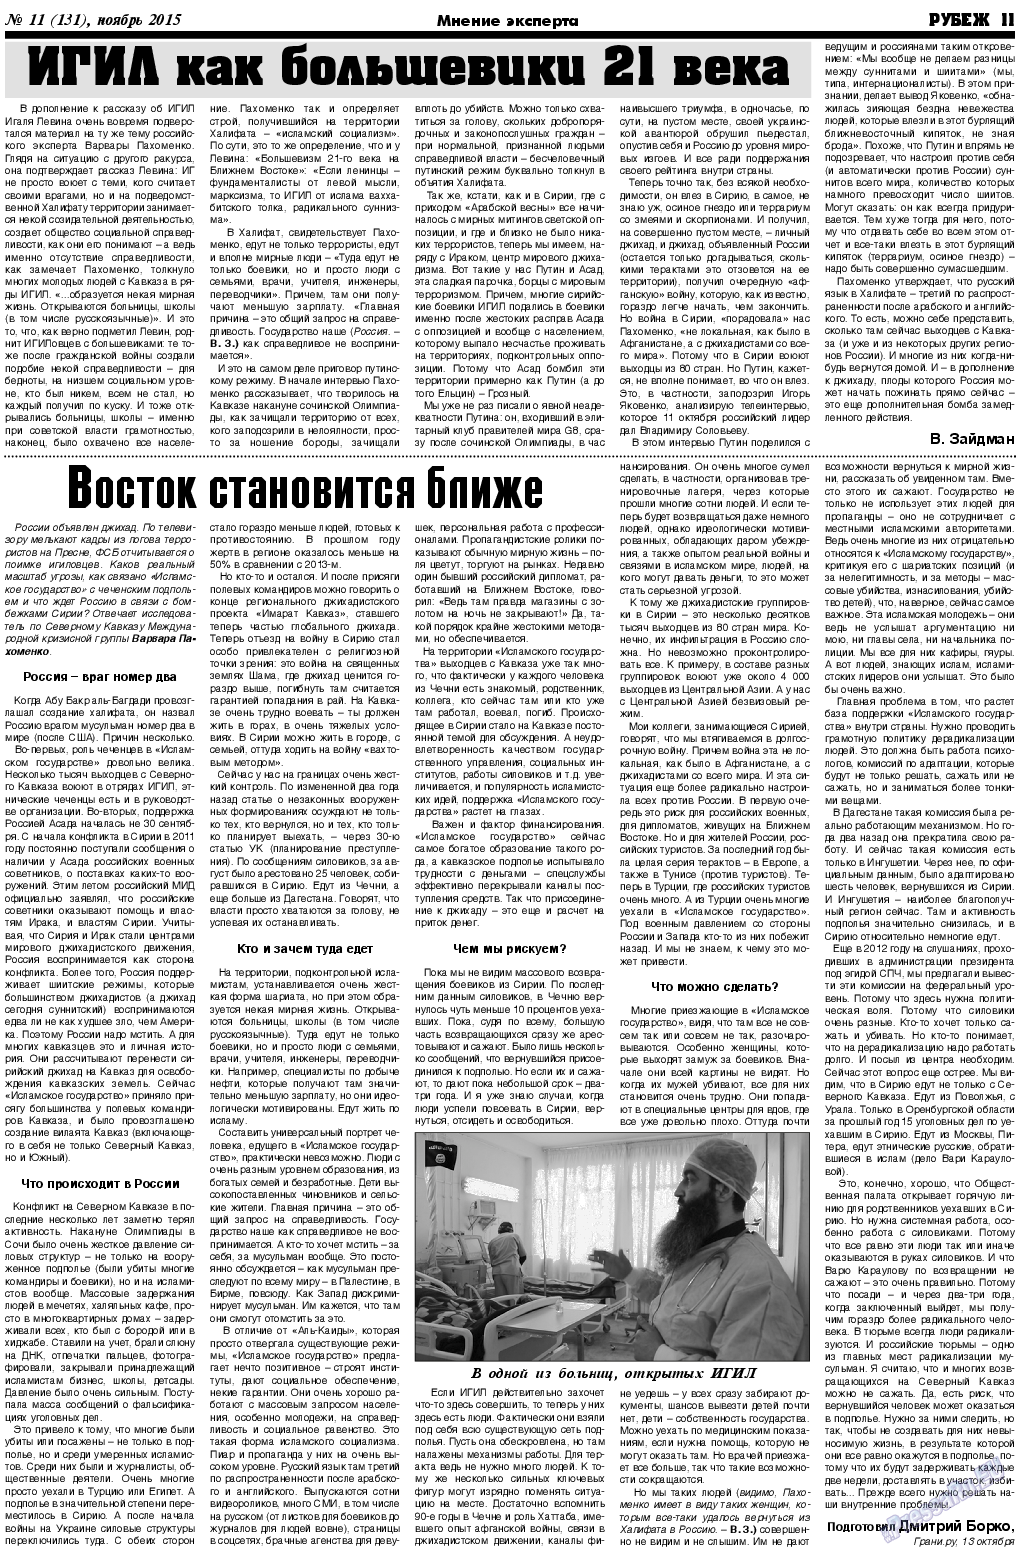 Рубеж, газета. 2015 №11 стр.11